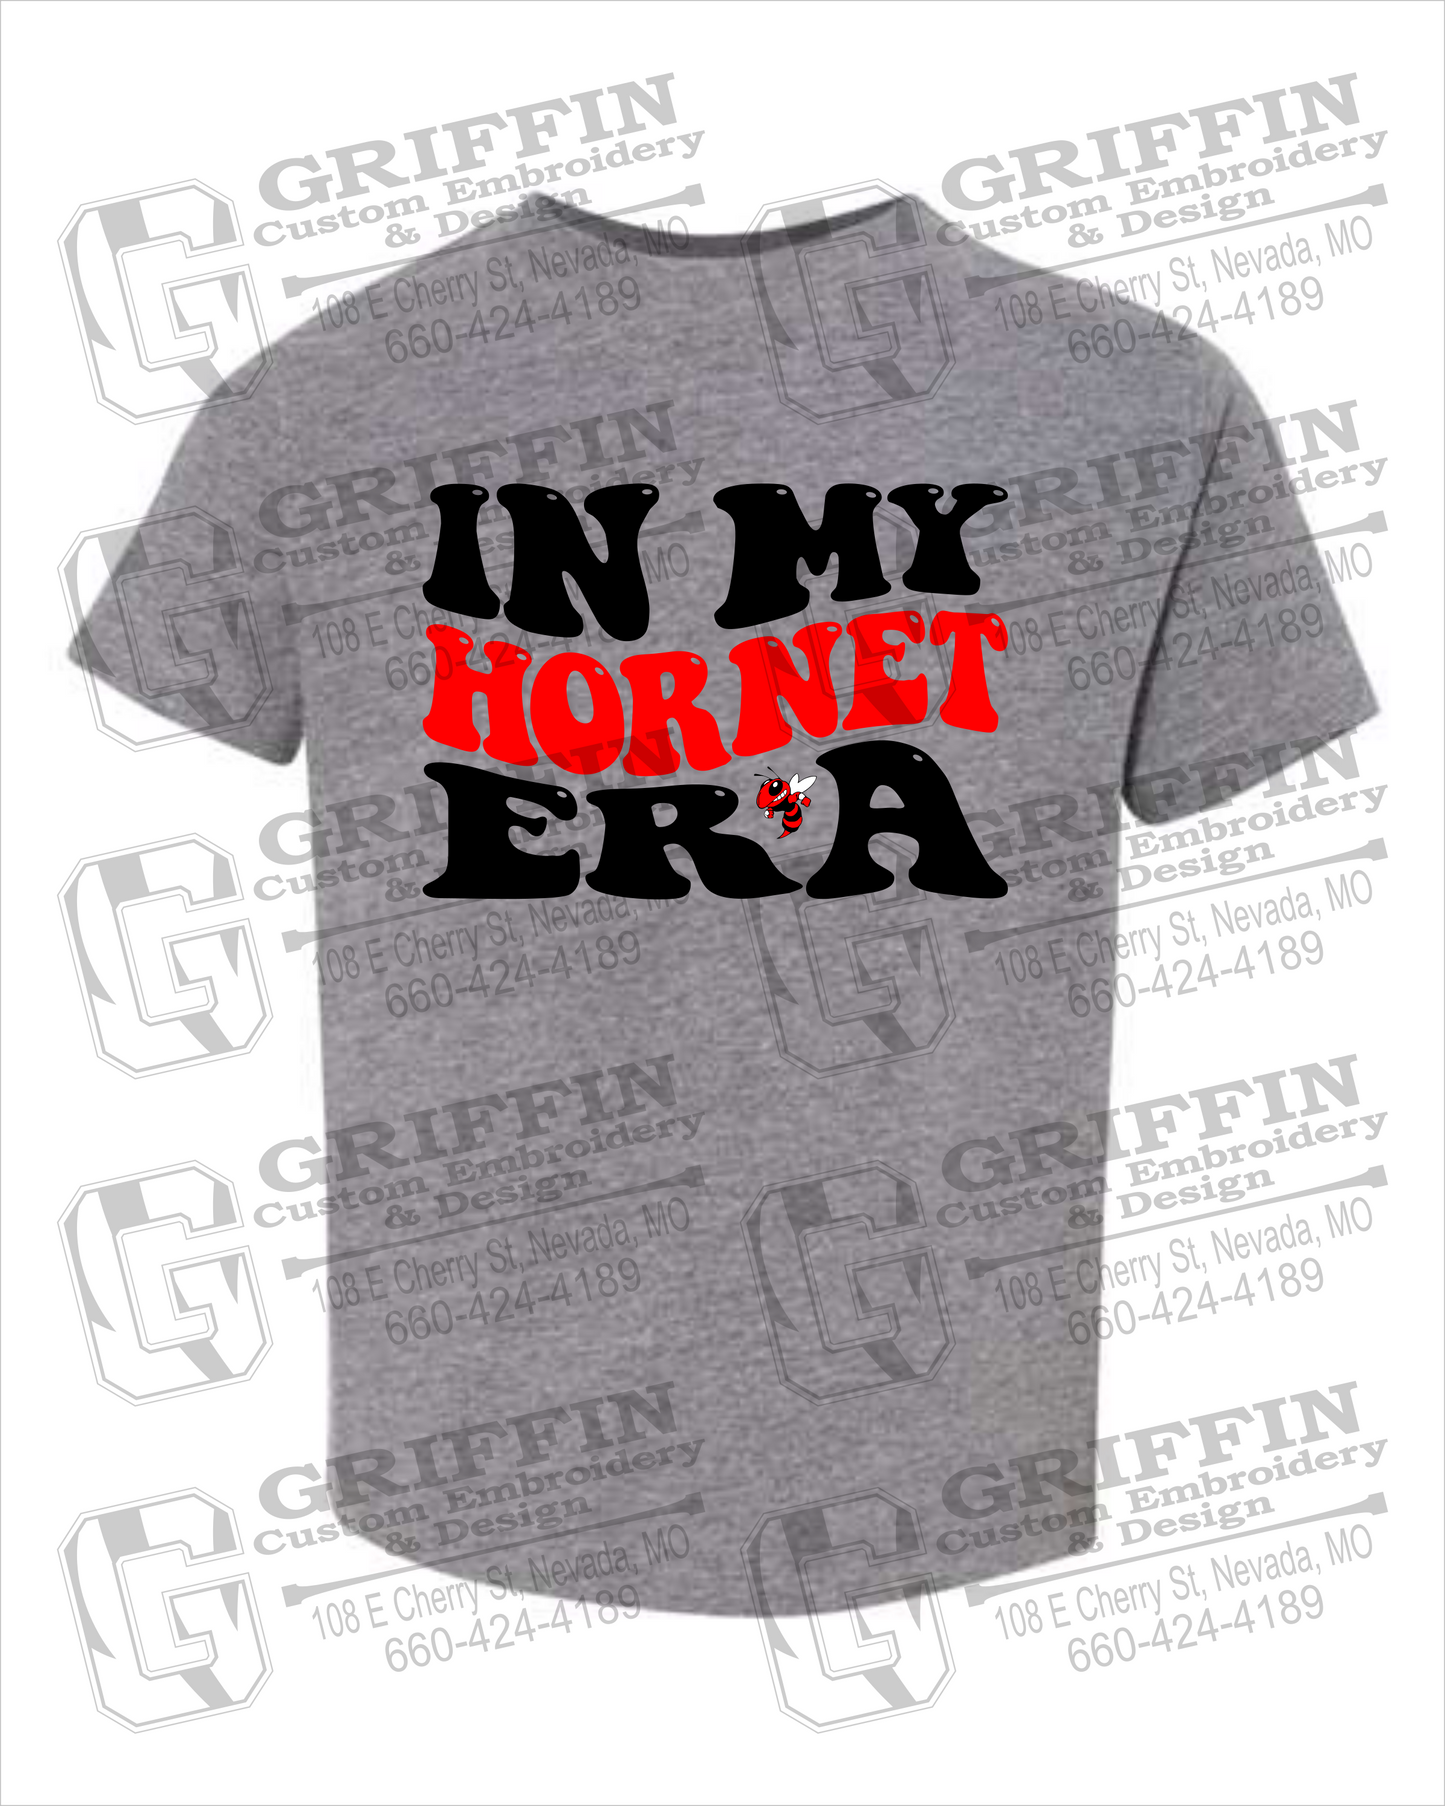 Hume Hornets 23-D Toddler/Infant T-Shirt